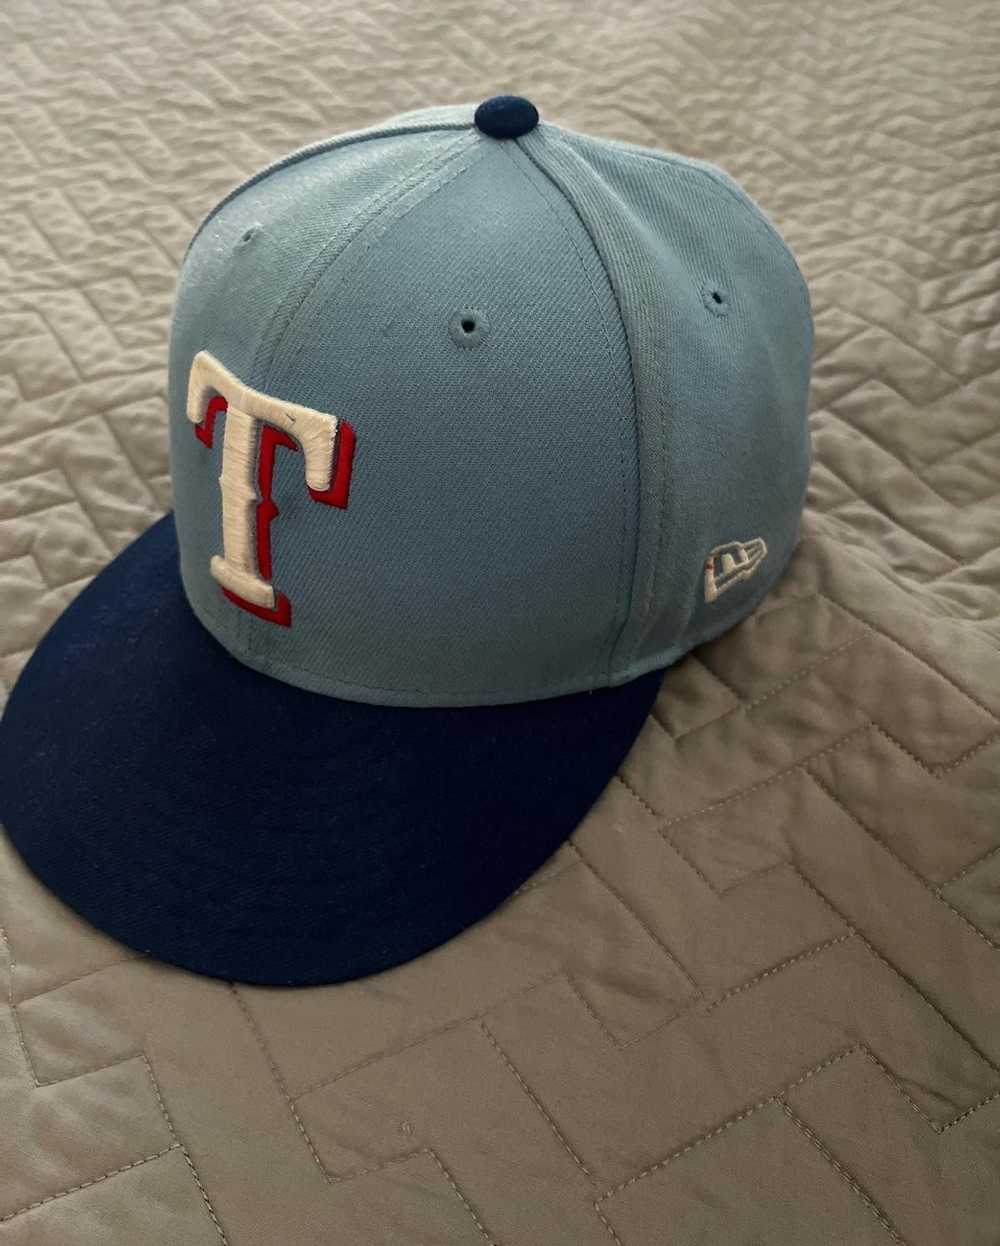 Hat Club × New Era Texas Rangers - image 1